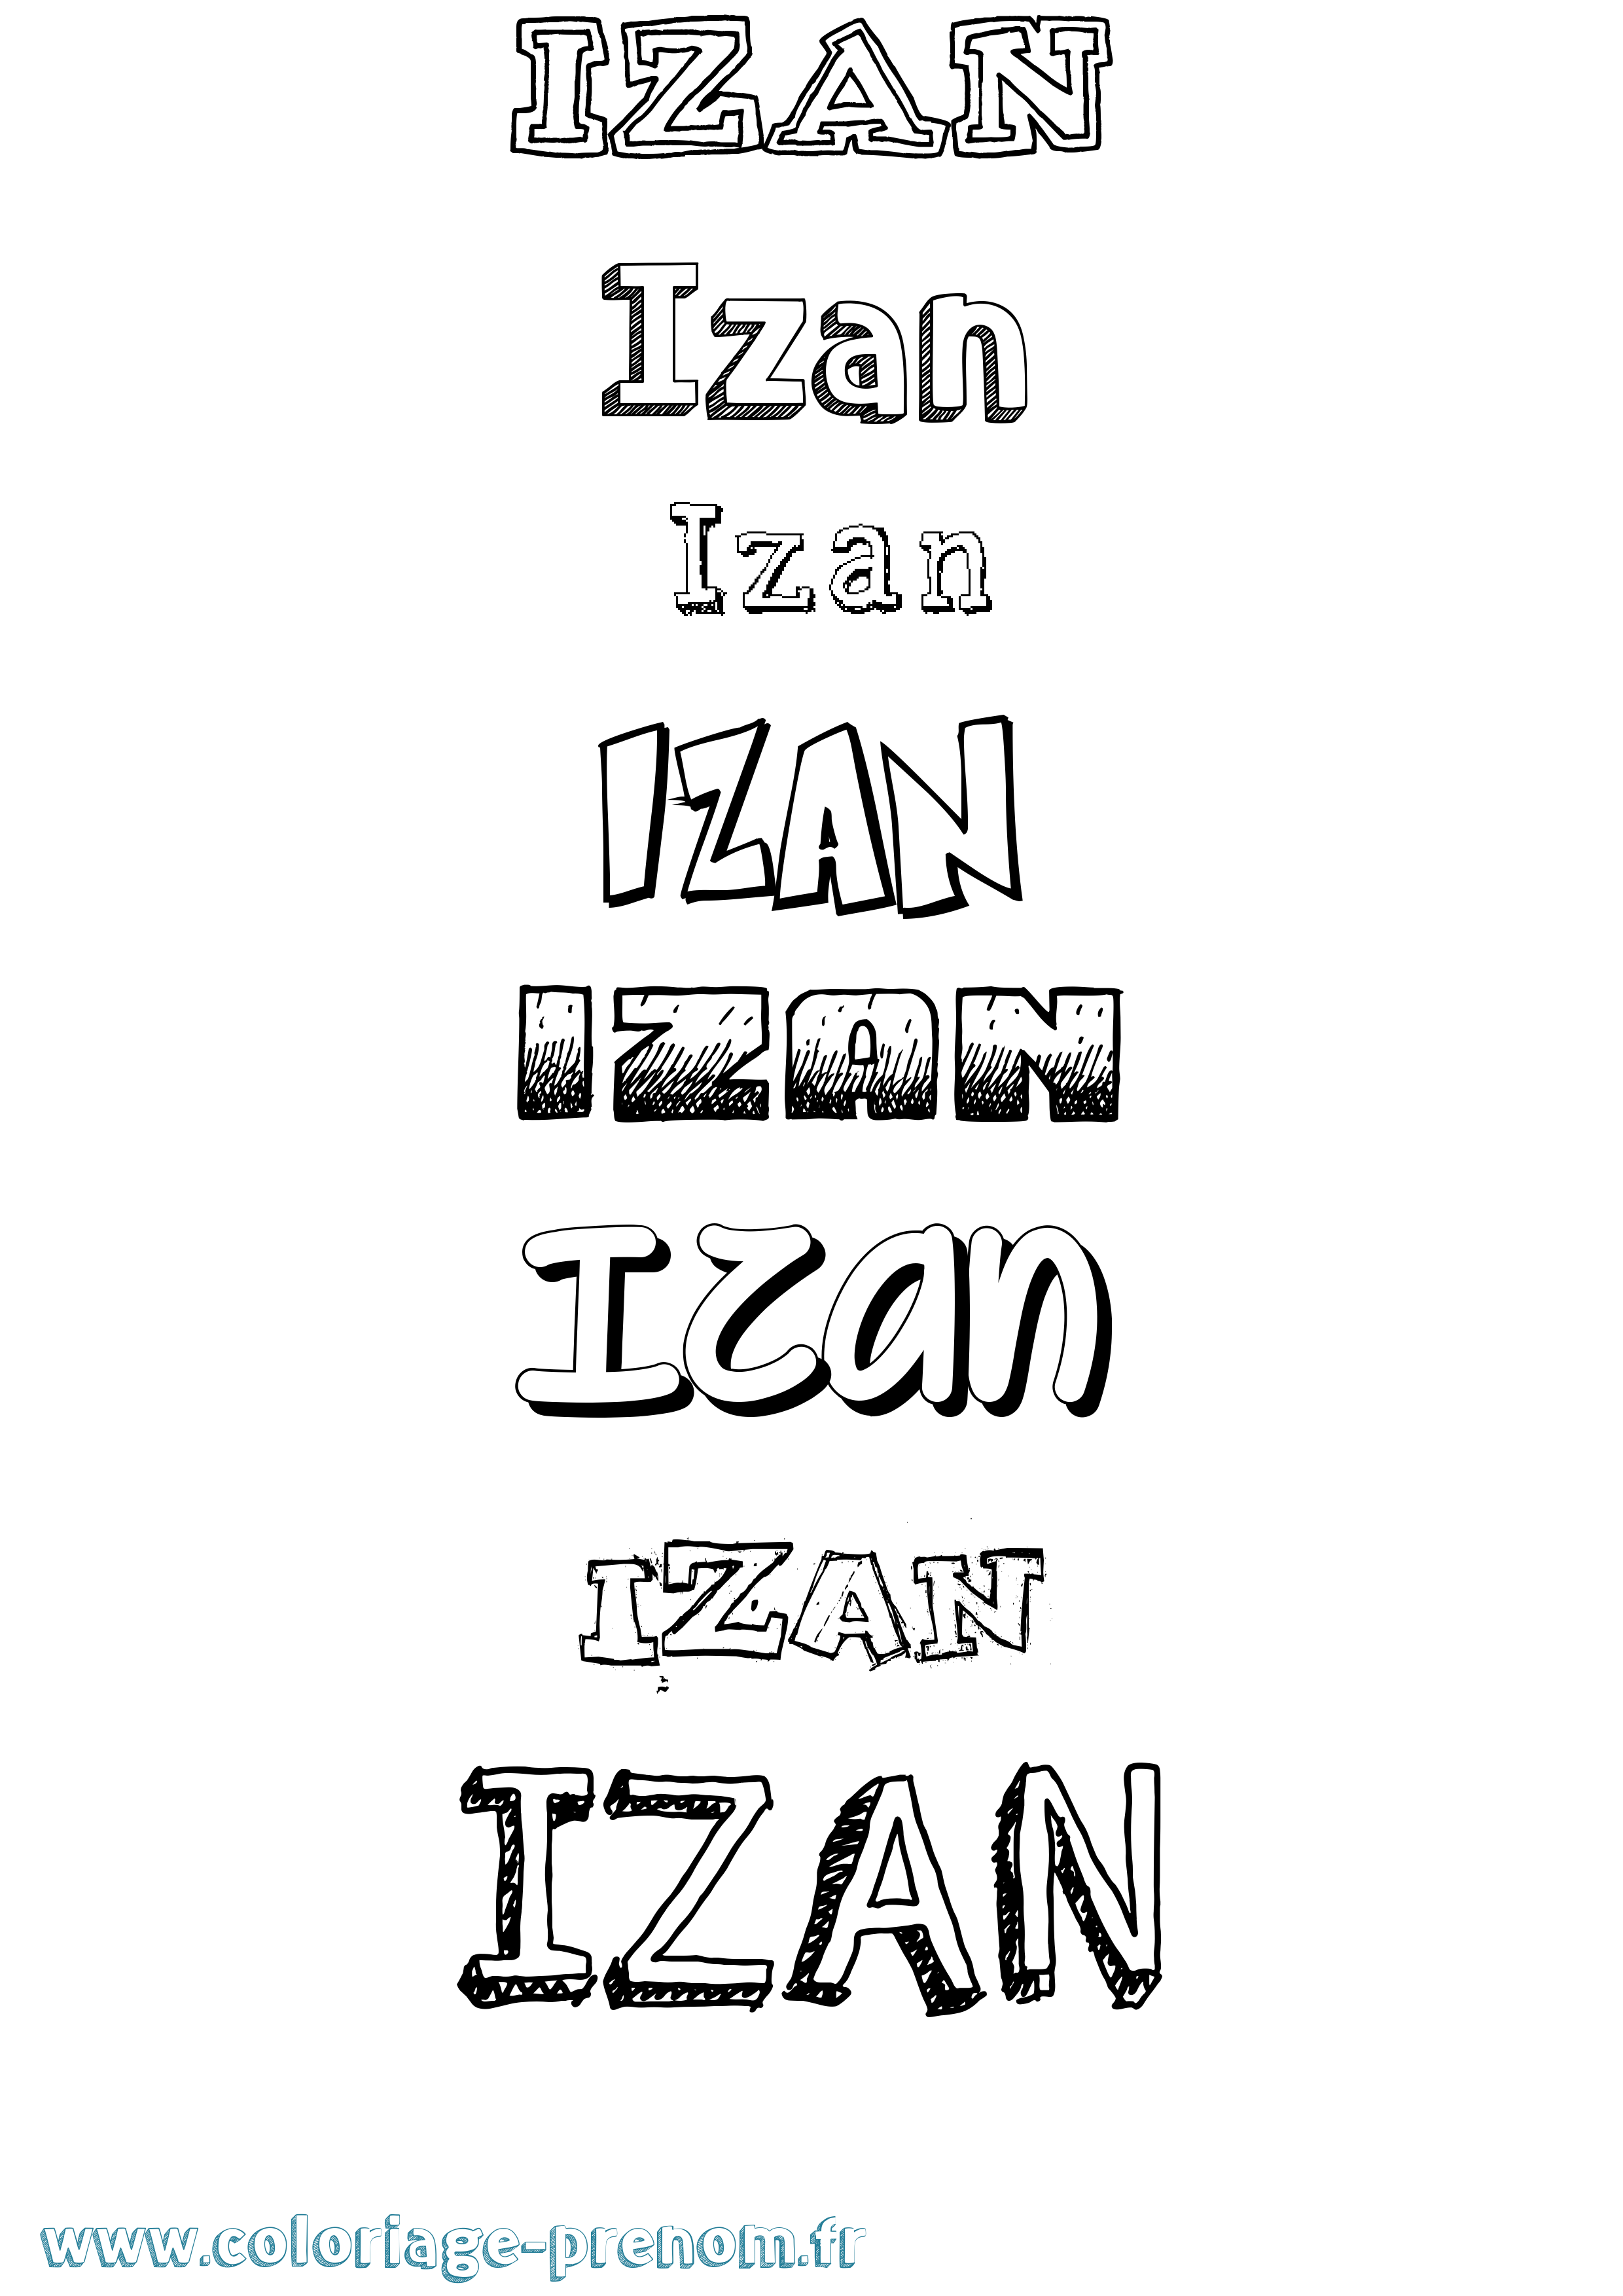 Coloriage prénom Izan Dessiné